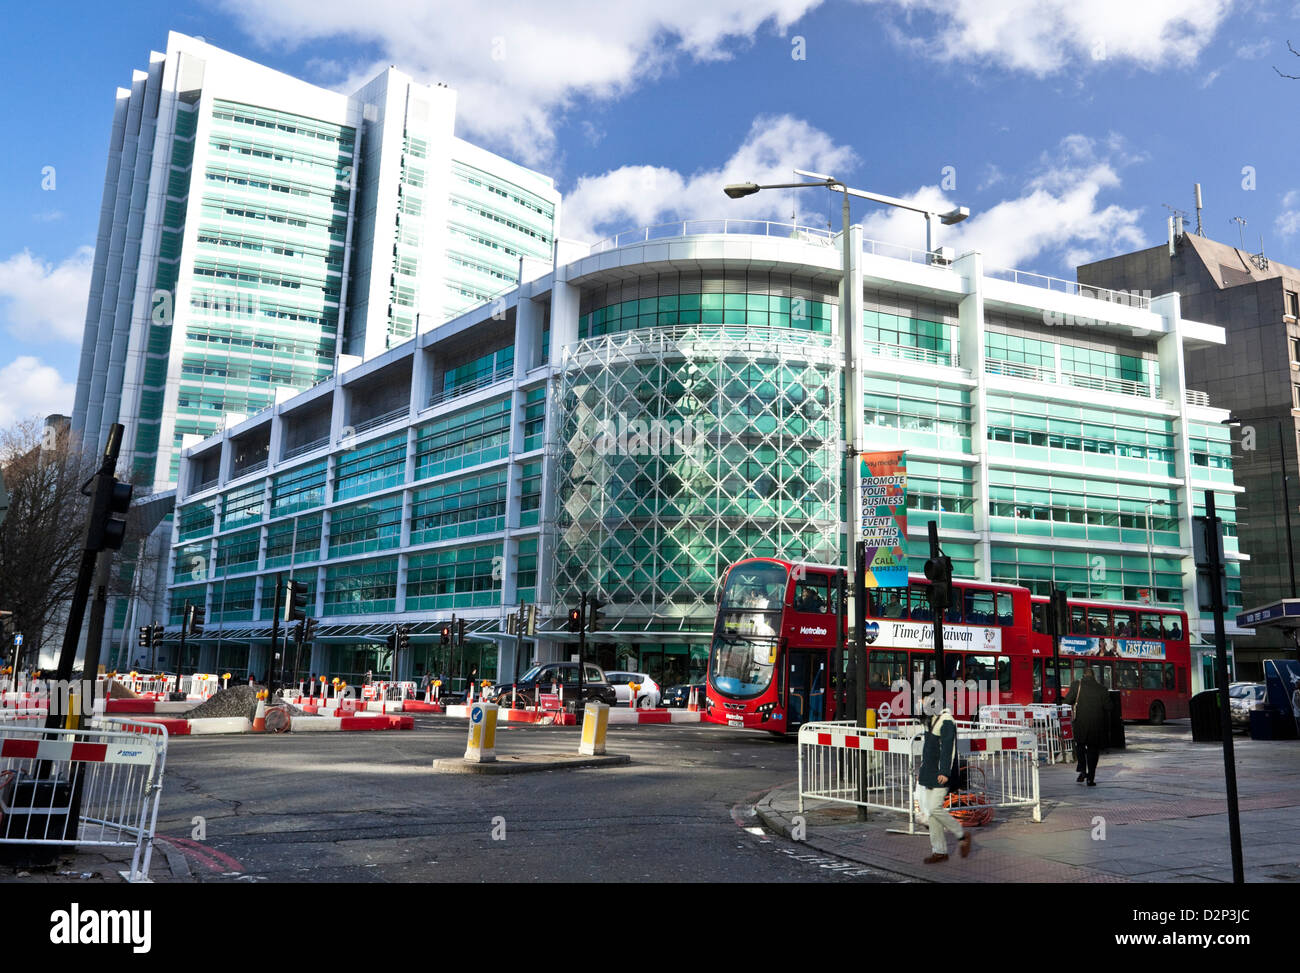 University College Hospital Accident et d'urgence (UCH), Euston Road, London, England, UK. Banque D'Images